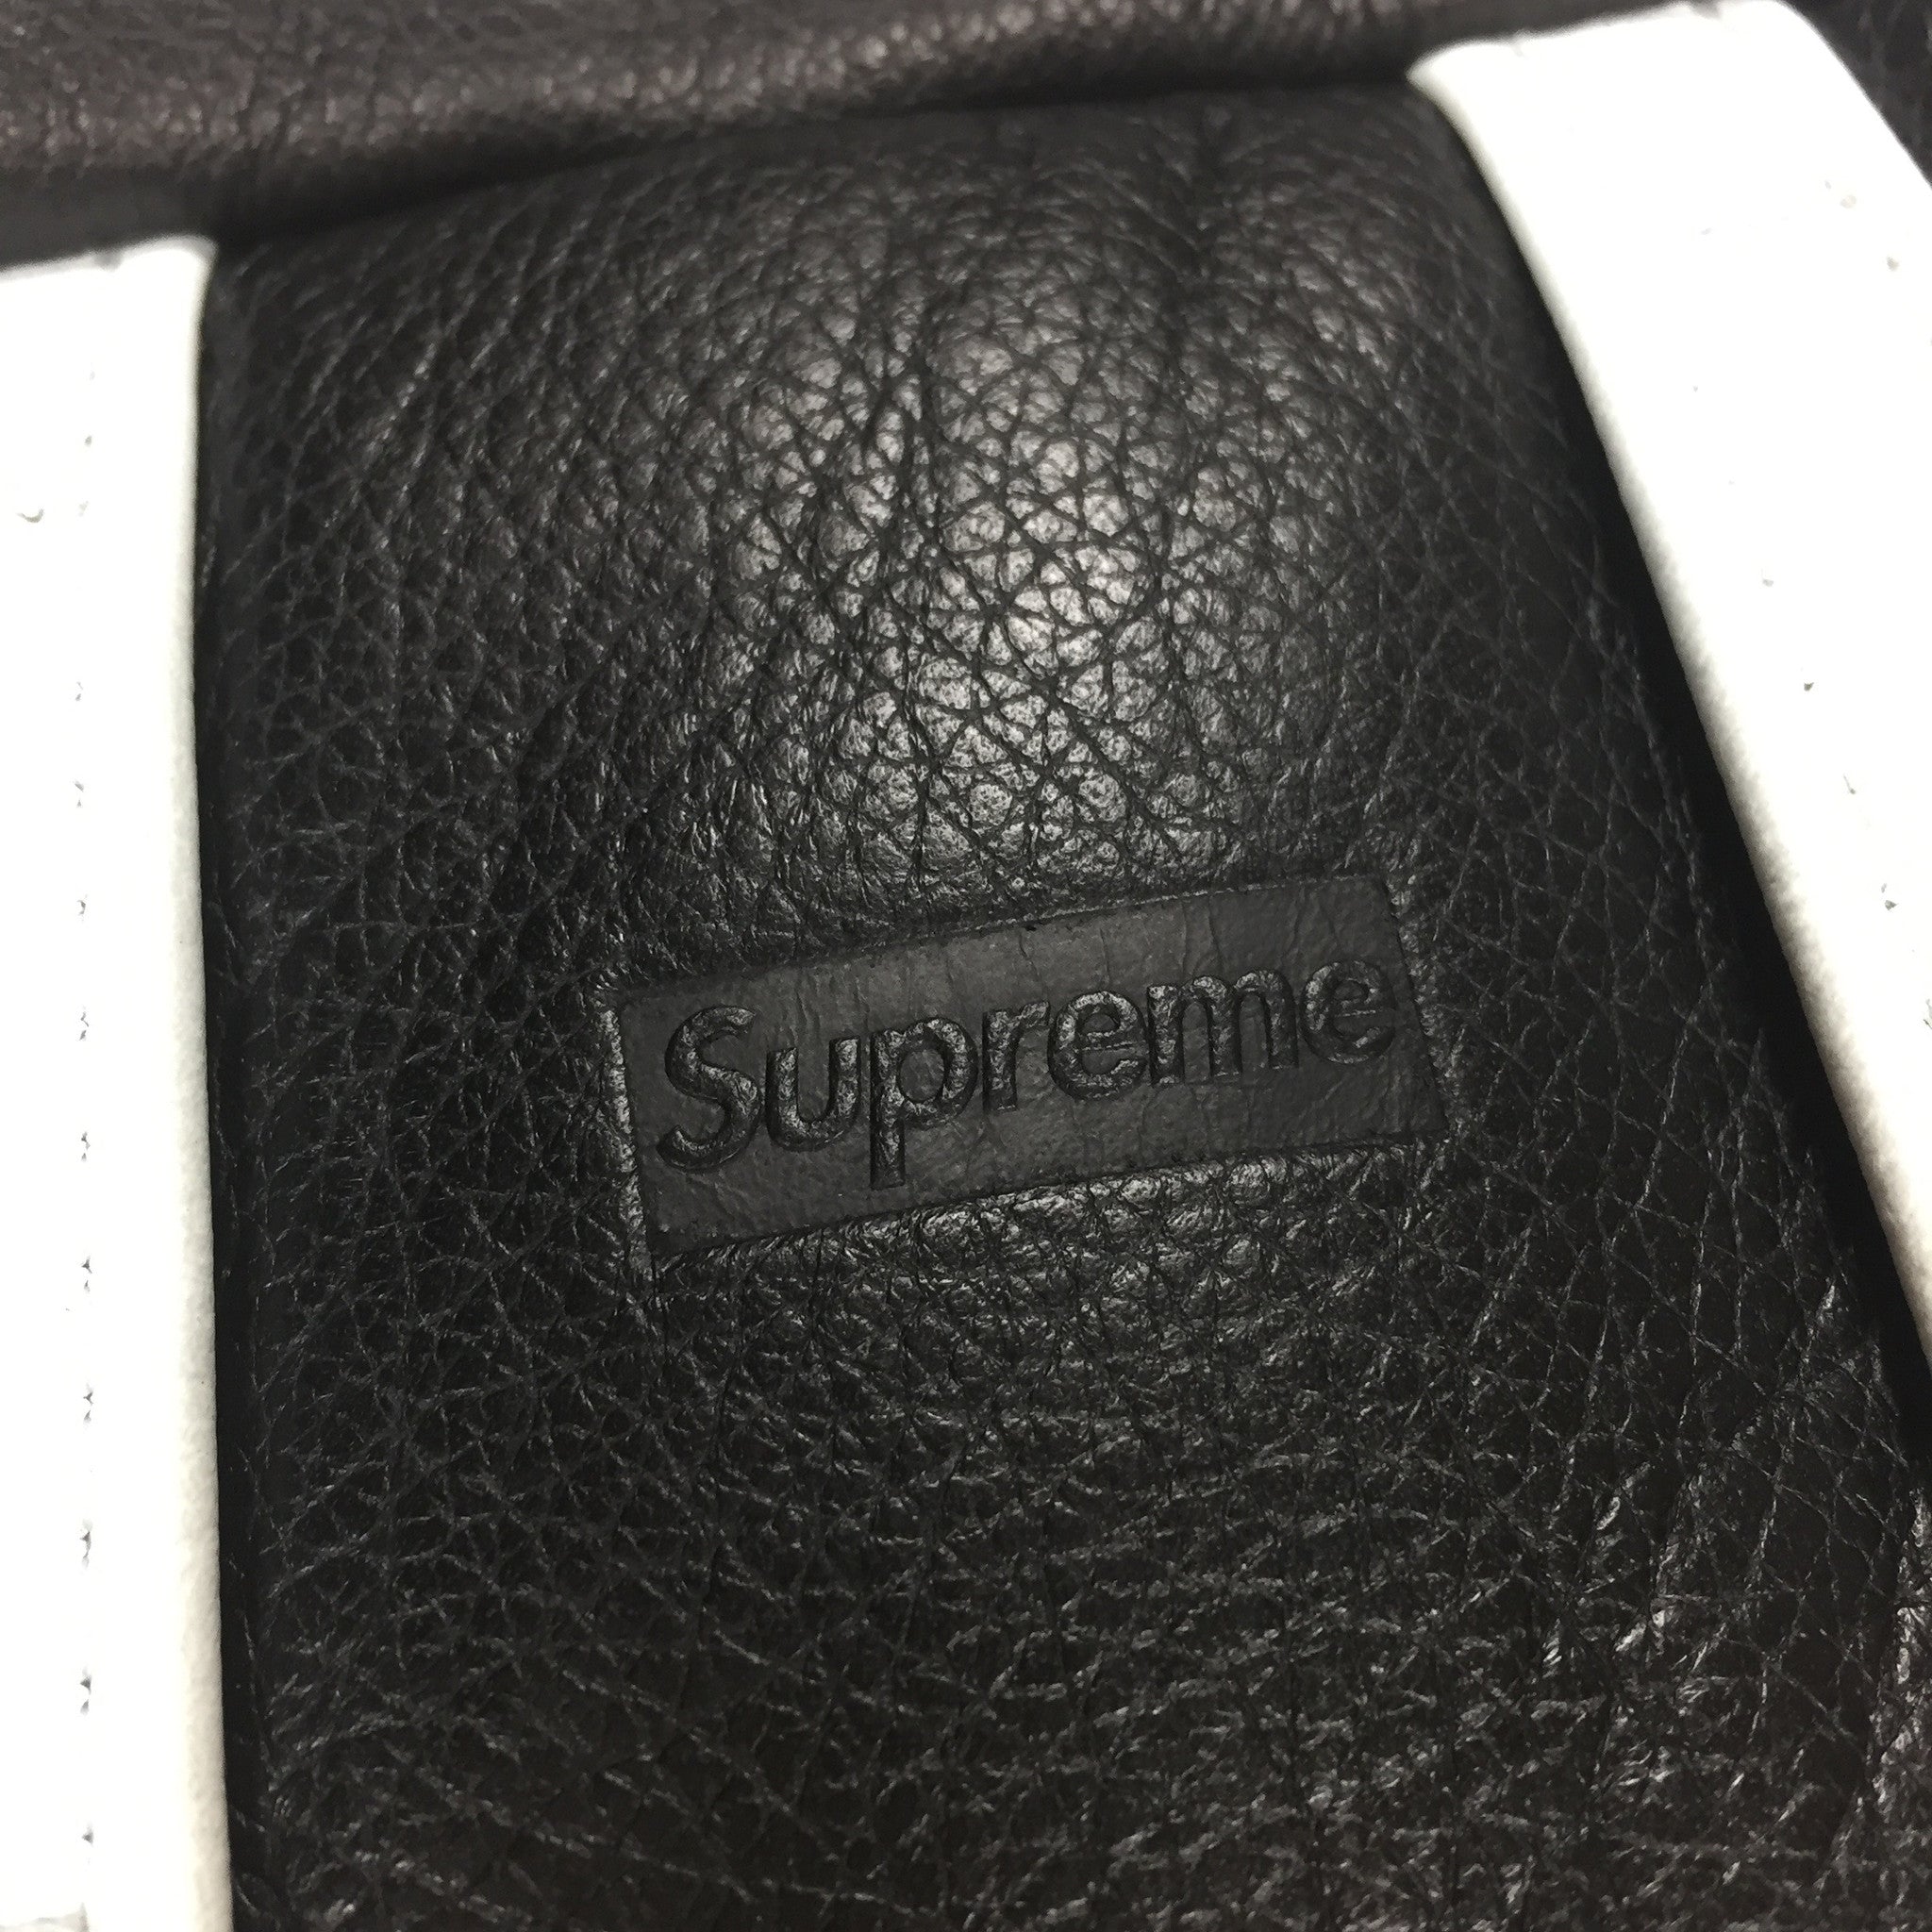 Supreme x Vanson - SS17 Black Leather Logo Patch Wrist Bag / Hip Pouch – eluXive